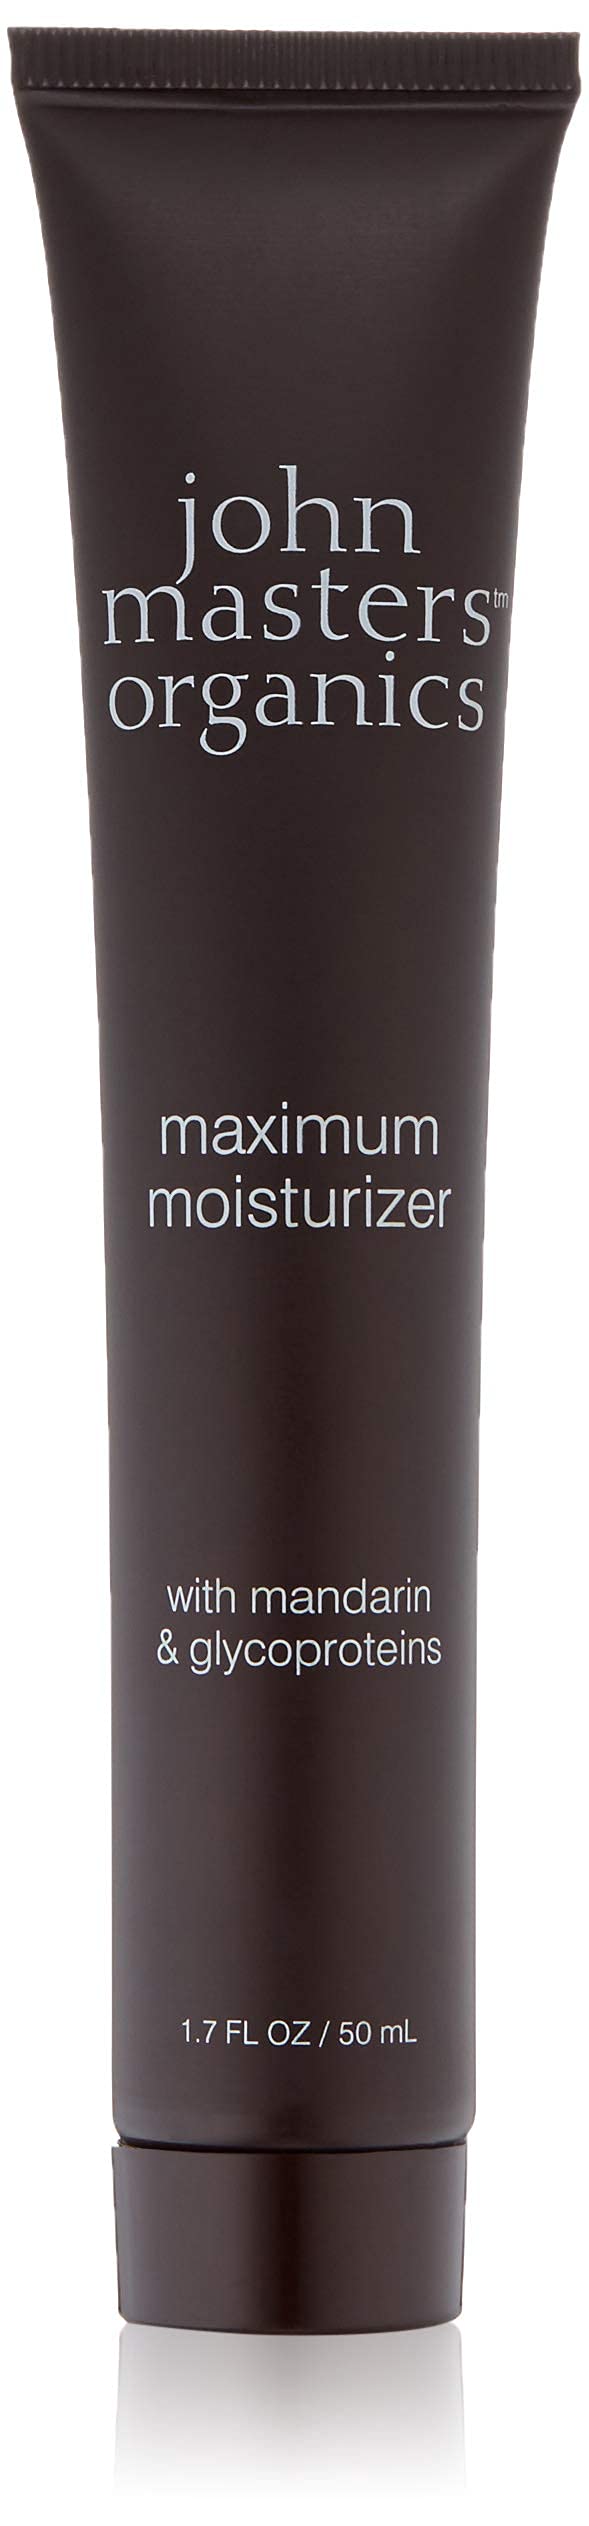 John Masters Organics maximum moisturizer with mandarin & glycoproteins